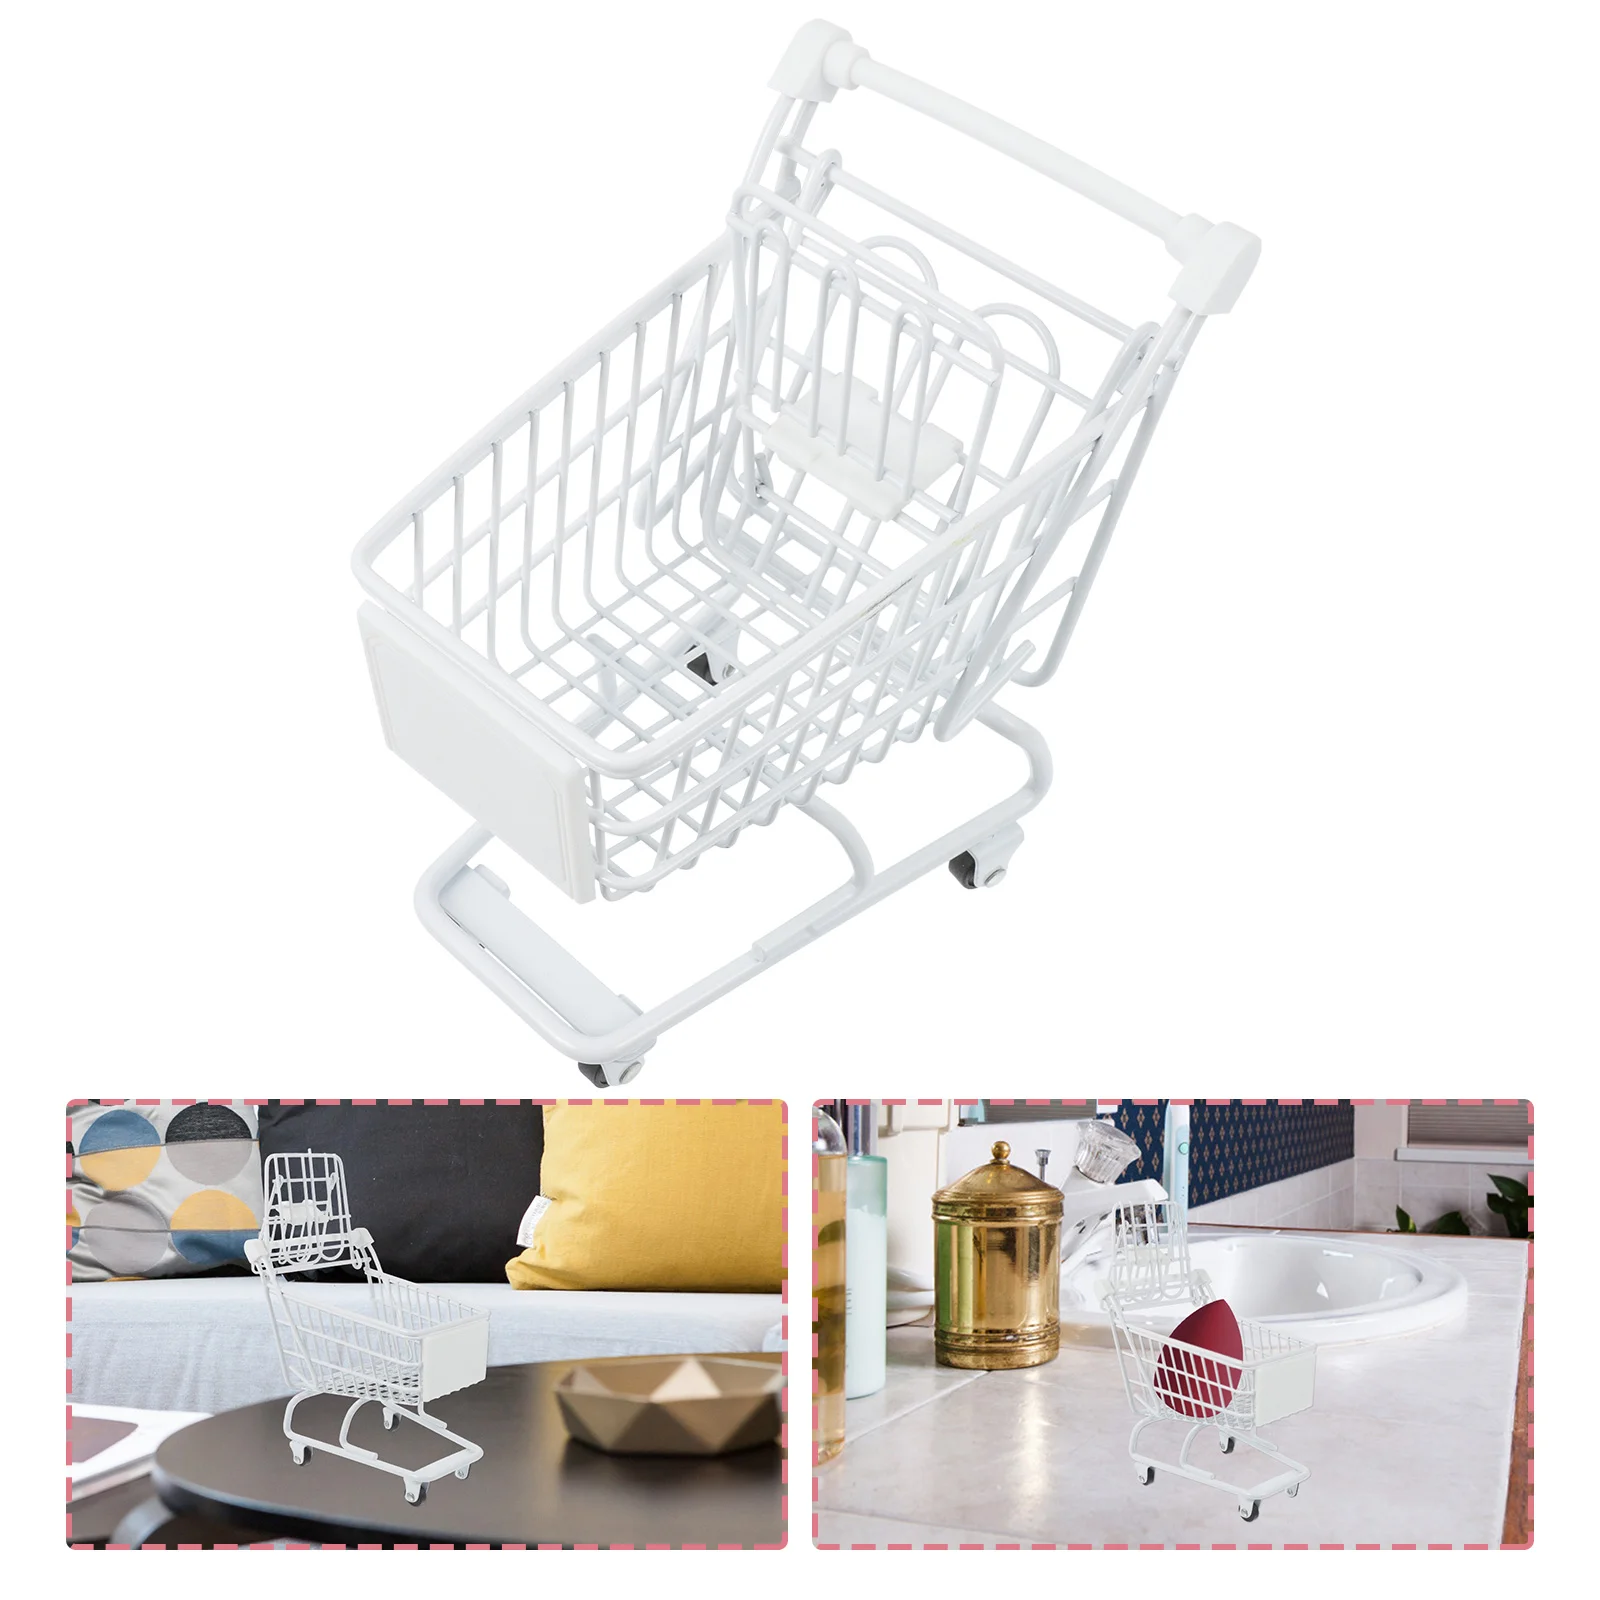 

Shopping Cart Supermarket Handcart: Decorative White Trolley Metal Shopping Day Grocery Cart Sponge Blender Holders for Home